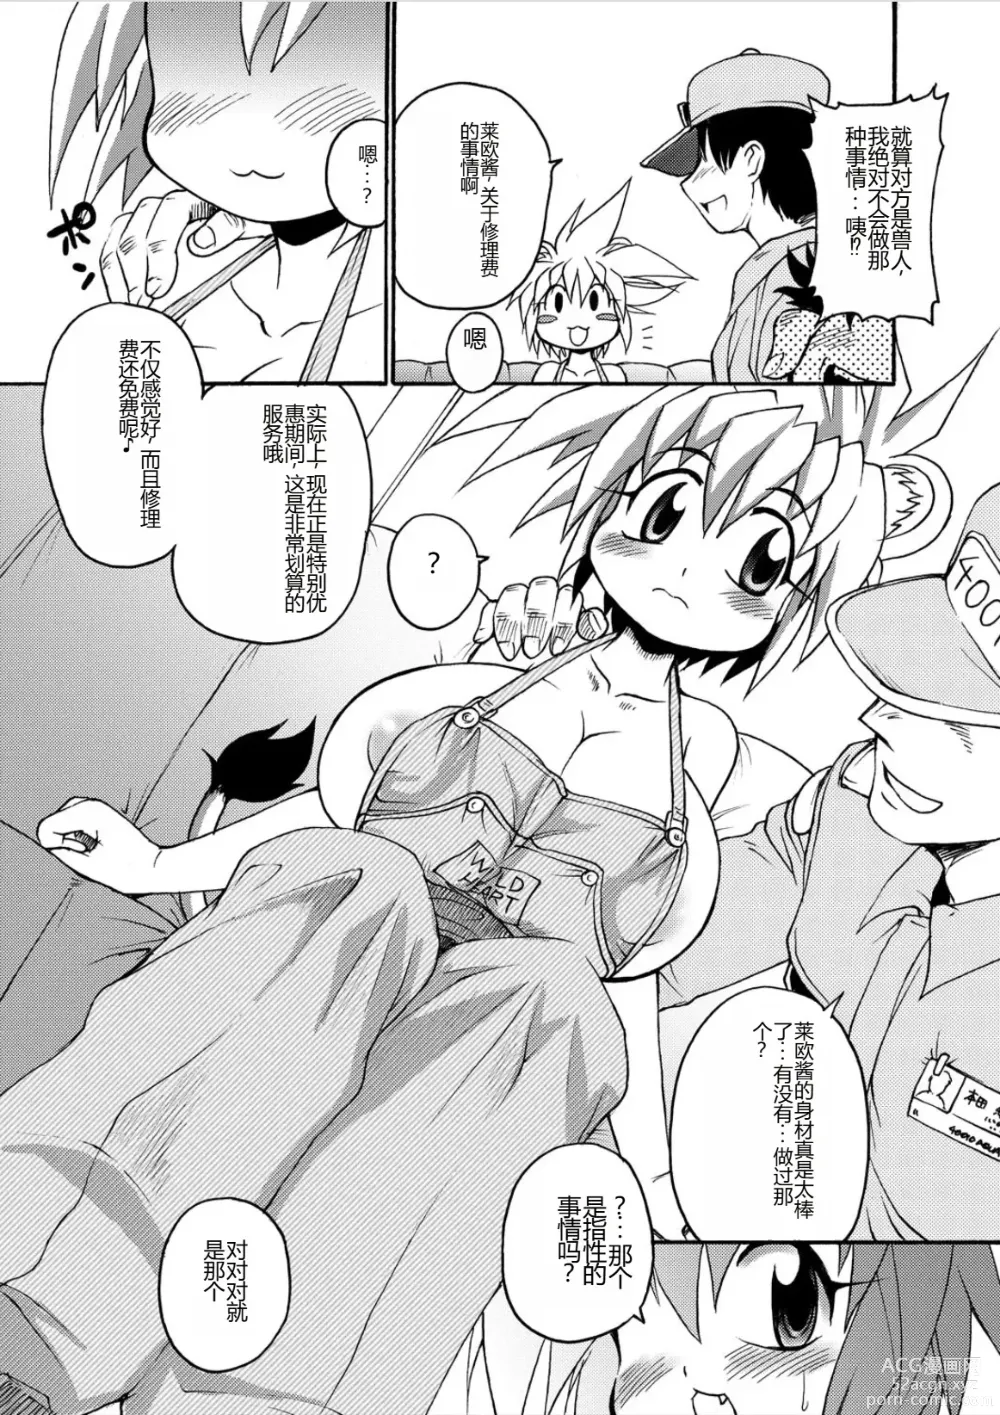 Page 7 of manga Lion Heart